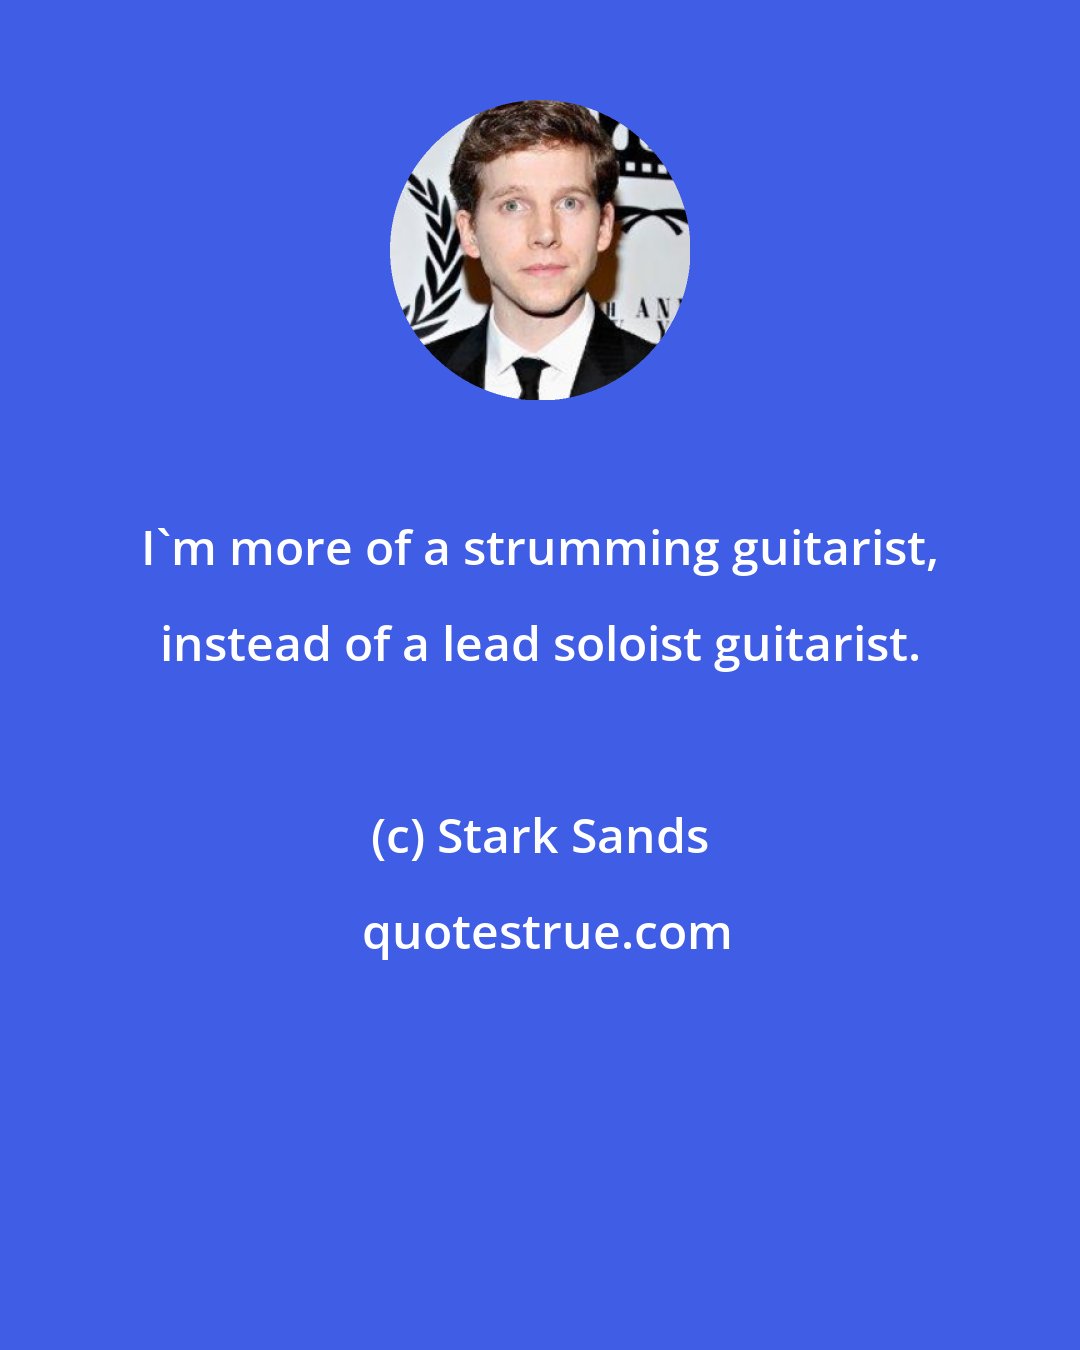 Stark Sands: I'm more of a strumming guitarist, instead of a lead soloist guitarist.